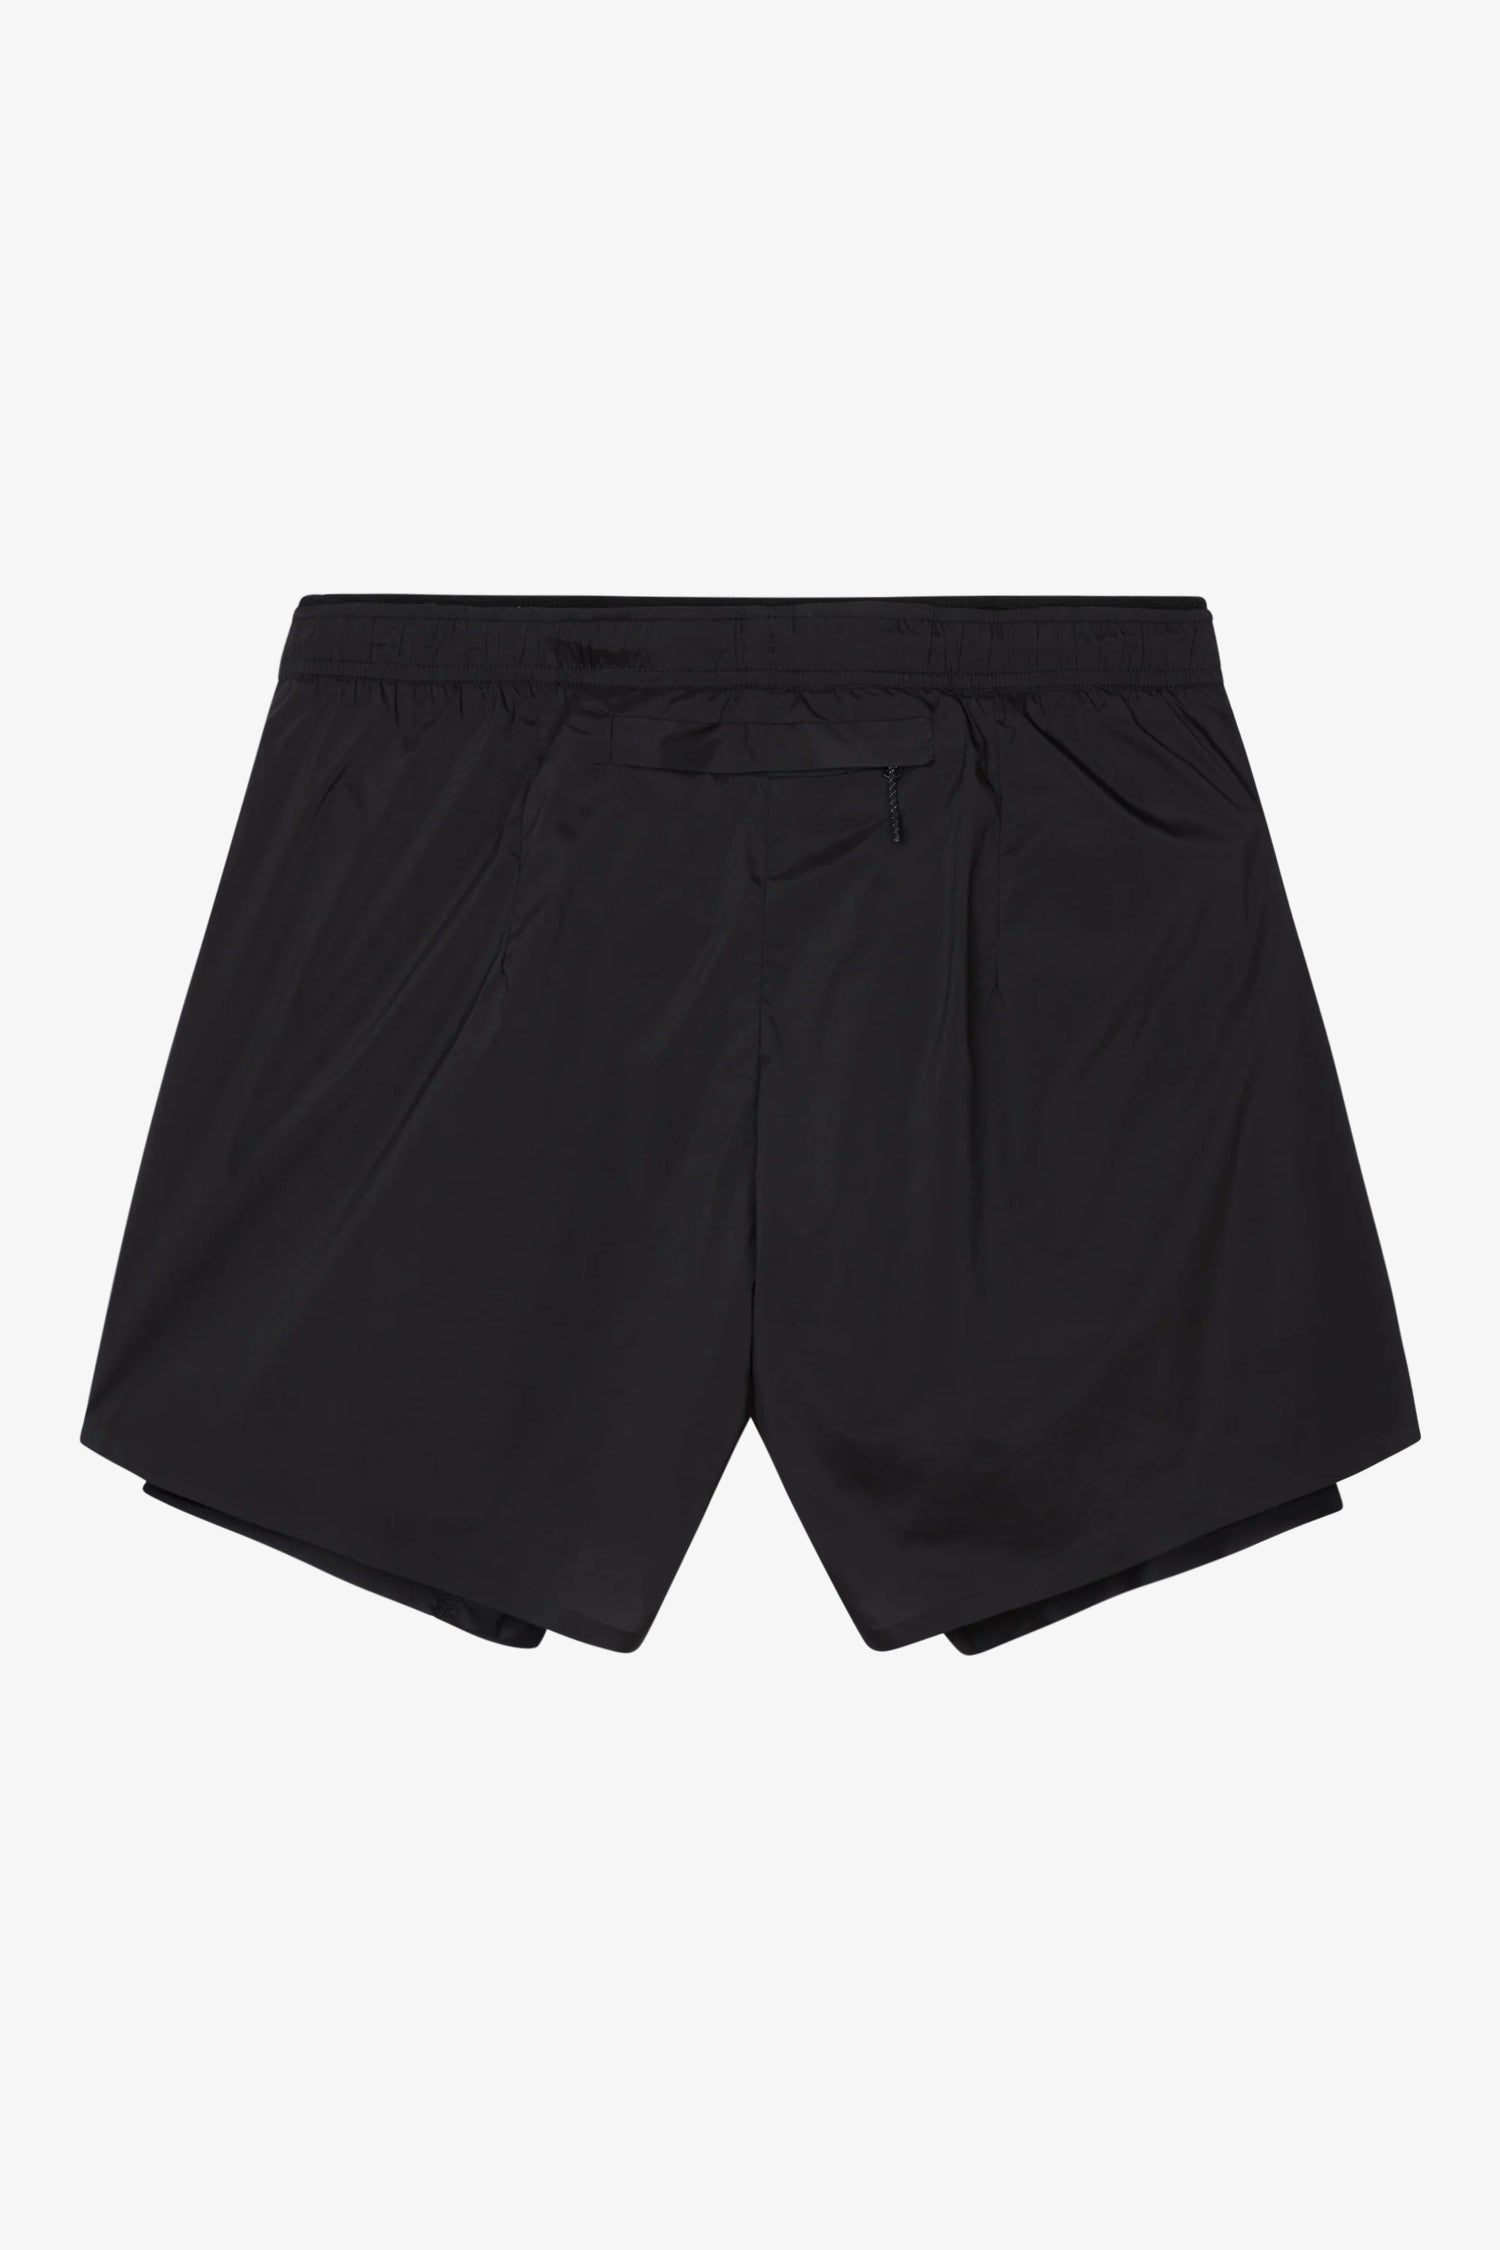 Tech Silk 5" Shorts- Selectshop FRAME